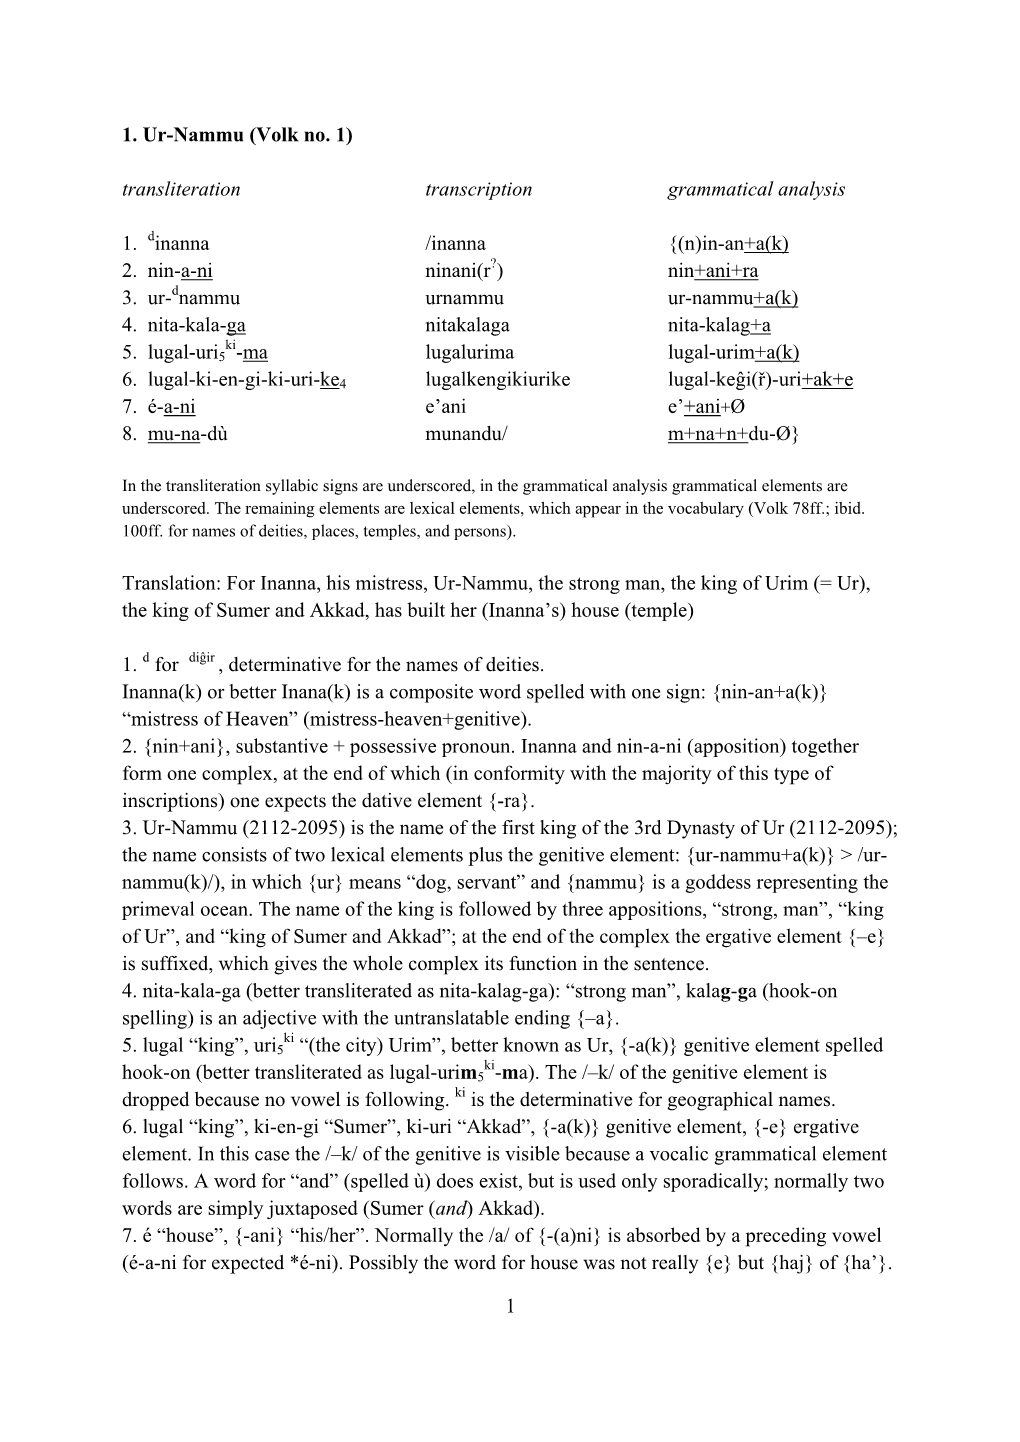 1 1. Ur-Nammu (Volk No. 1) Transliteration Transcription